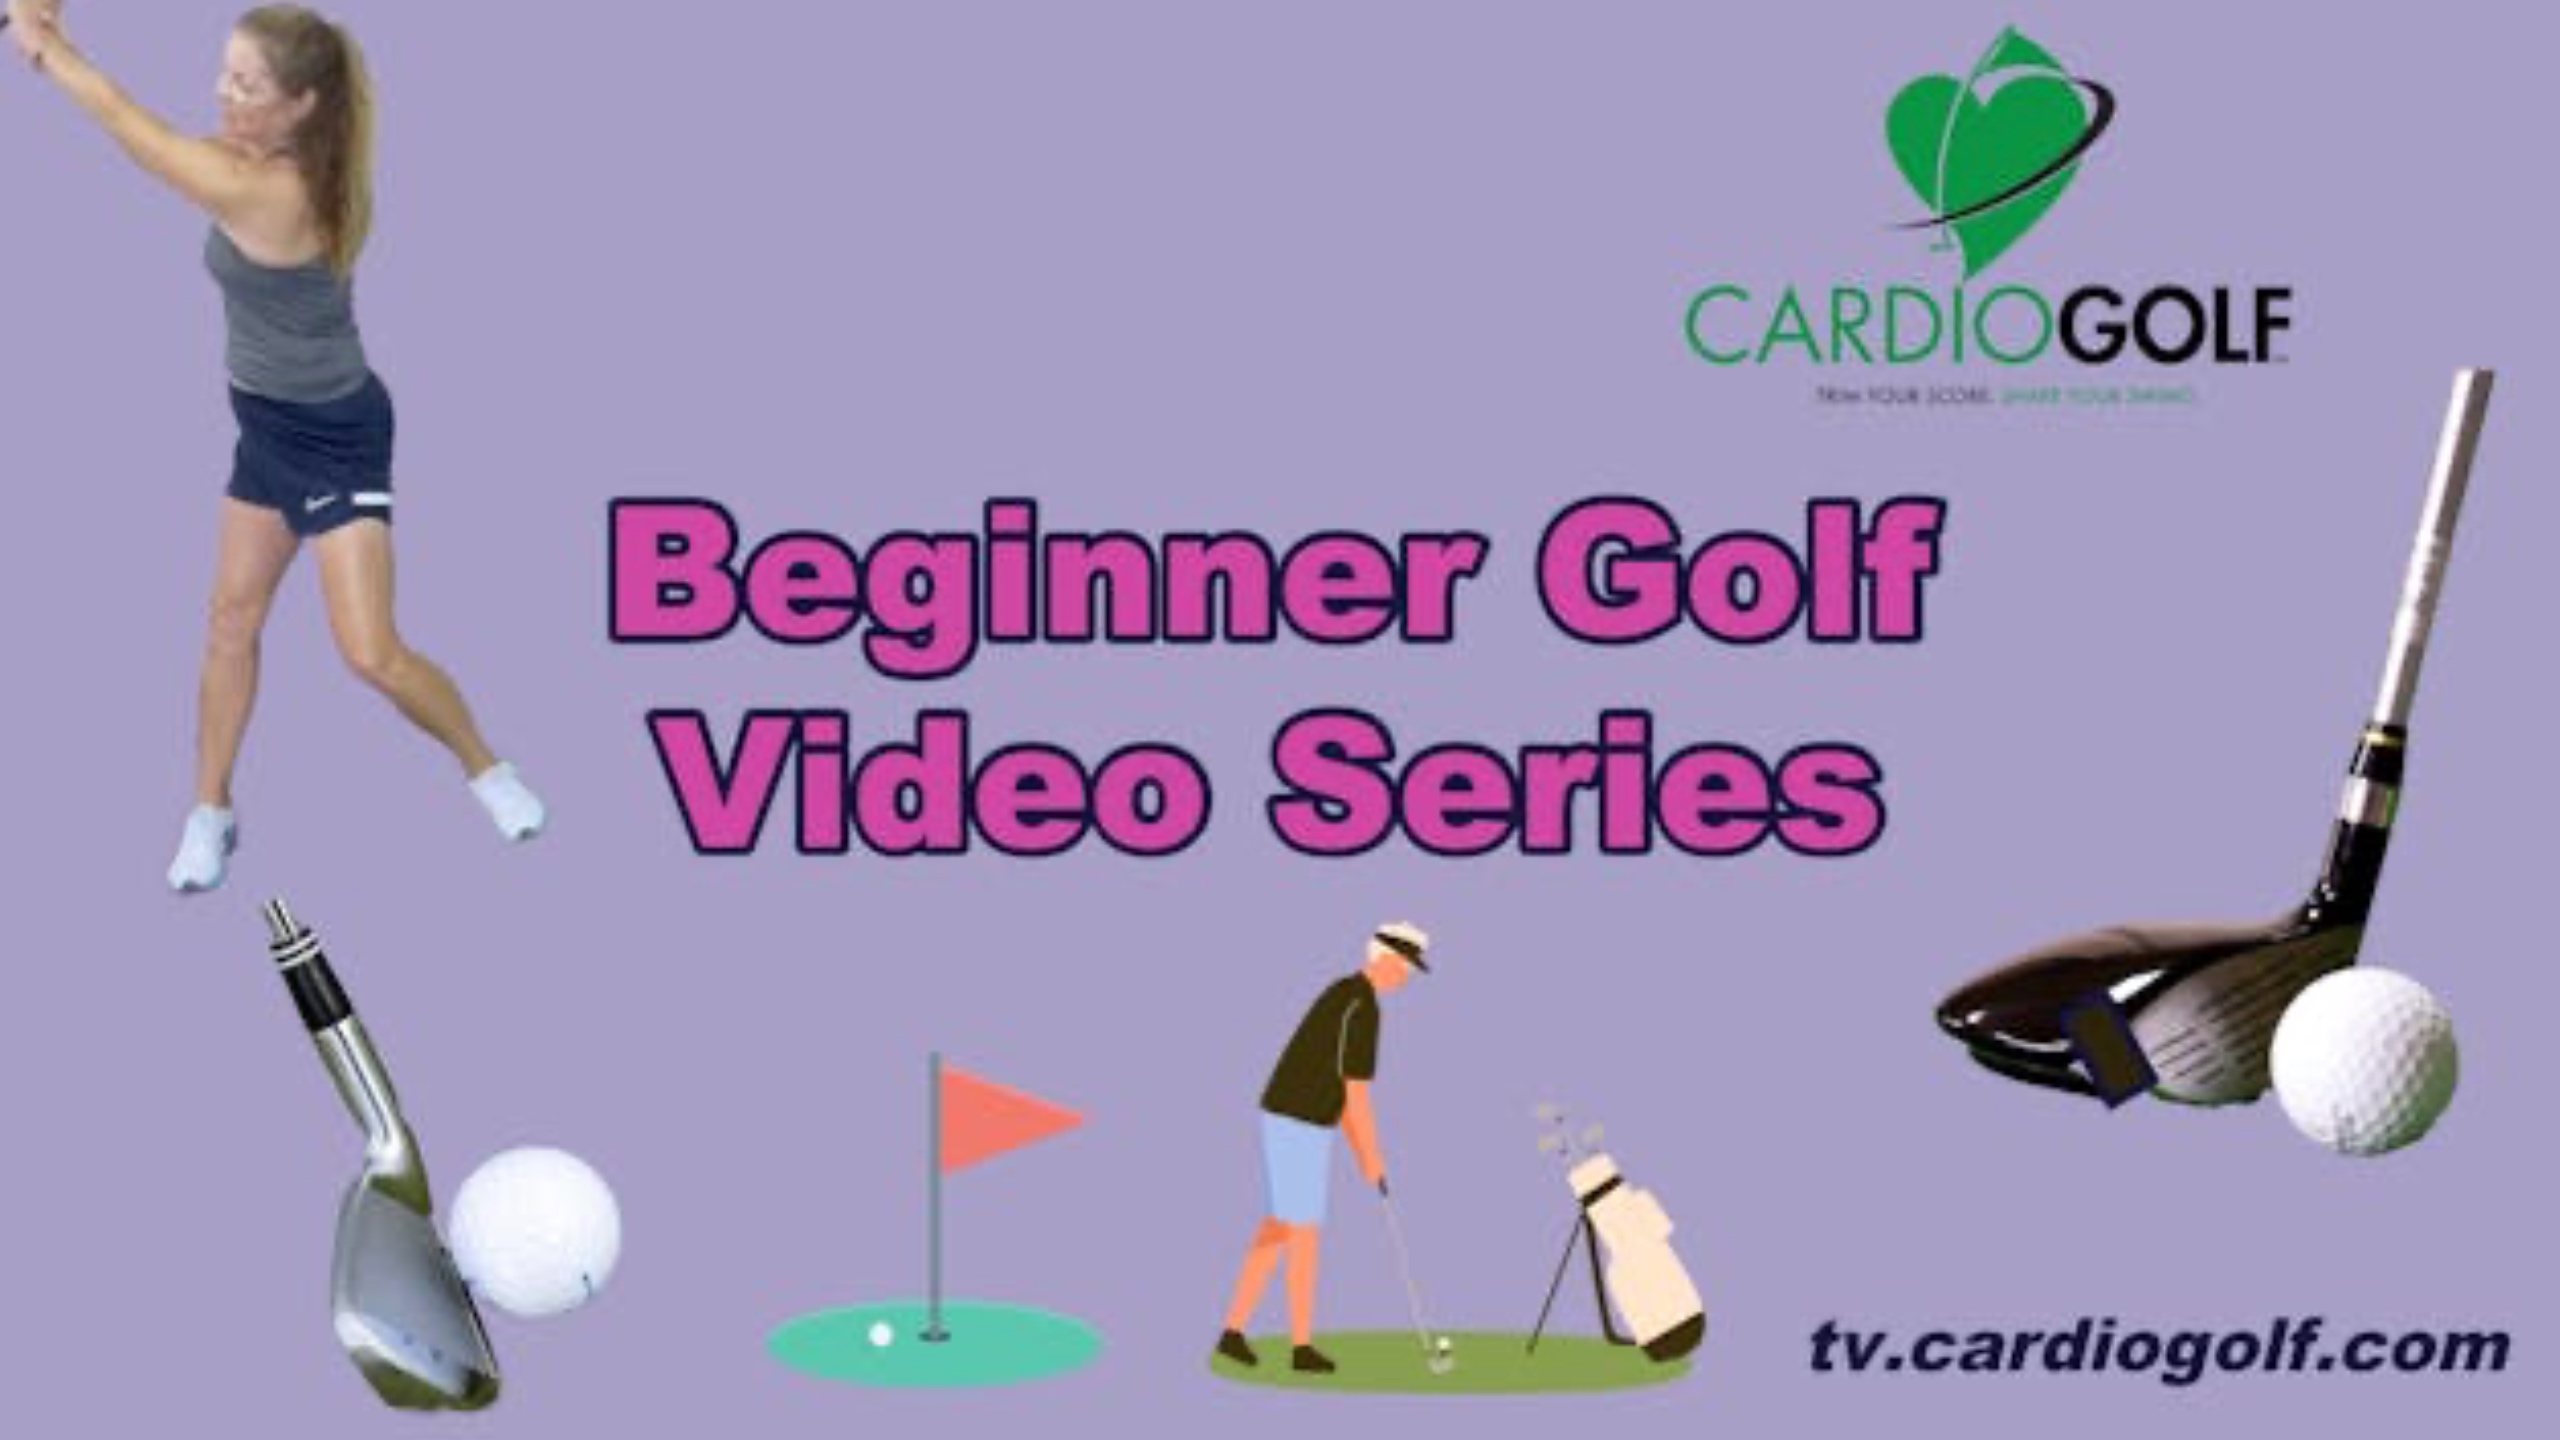 Beginner Golf Video Series by CardioGolf®. CardioGolf.com